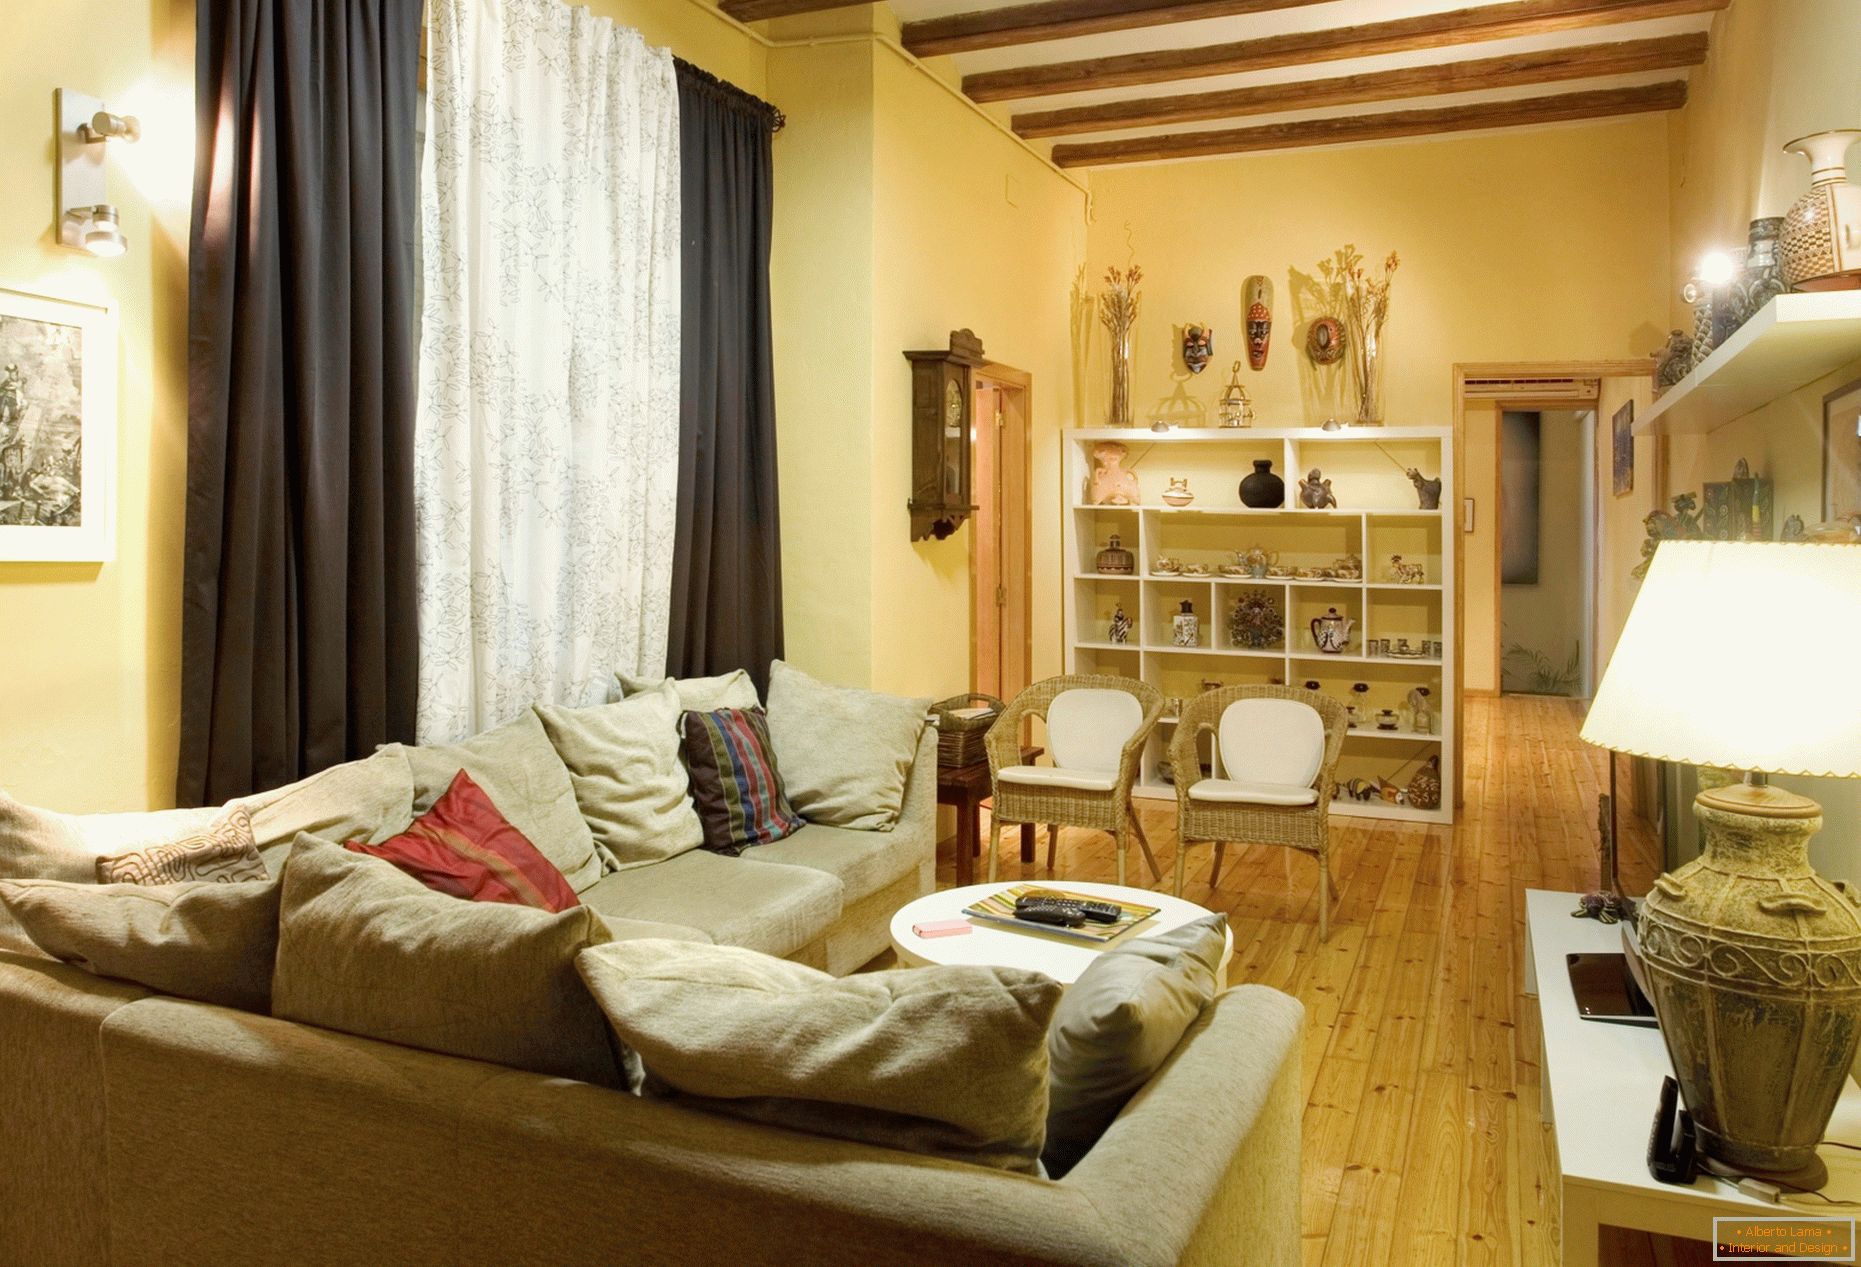 Interior design of a small living room